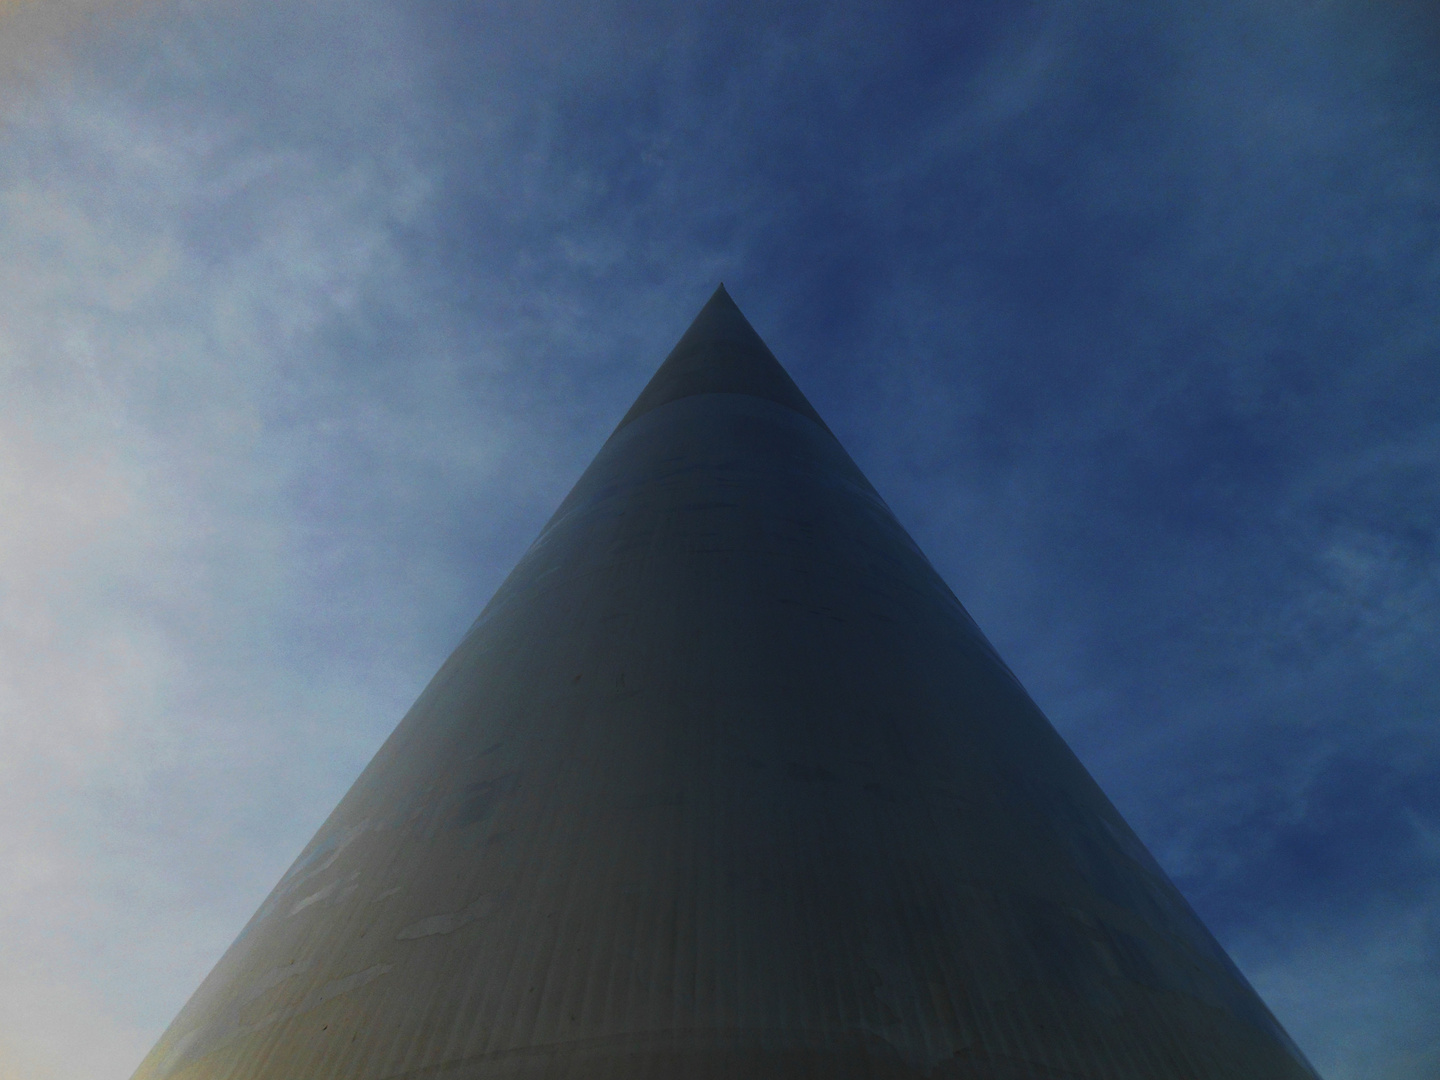 The spire